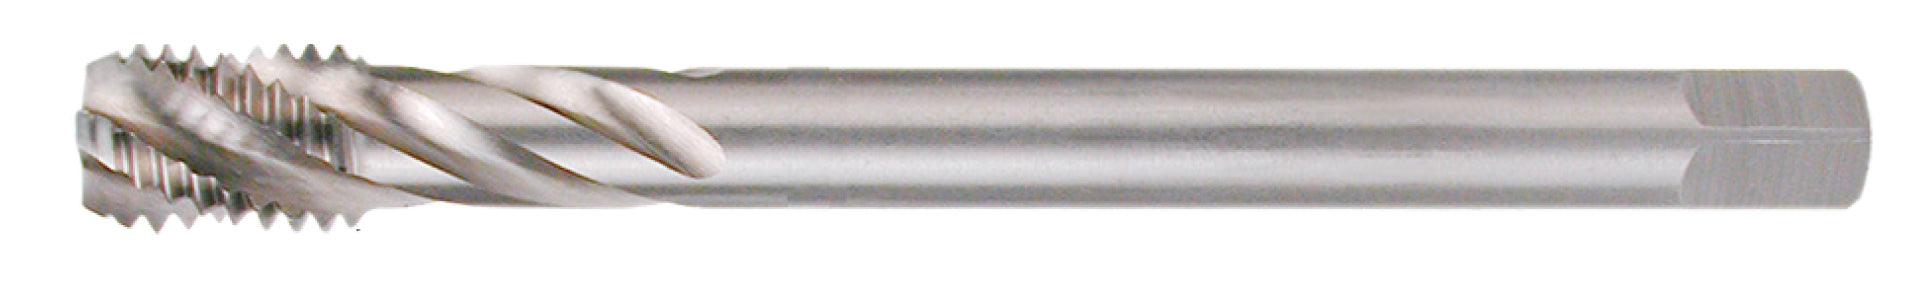 Labor Maschinengewindebohrer geschliffene Sacklöcher M18 HSS DIN376C - SS233180 - Tools.de TP Profishop GmbH